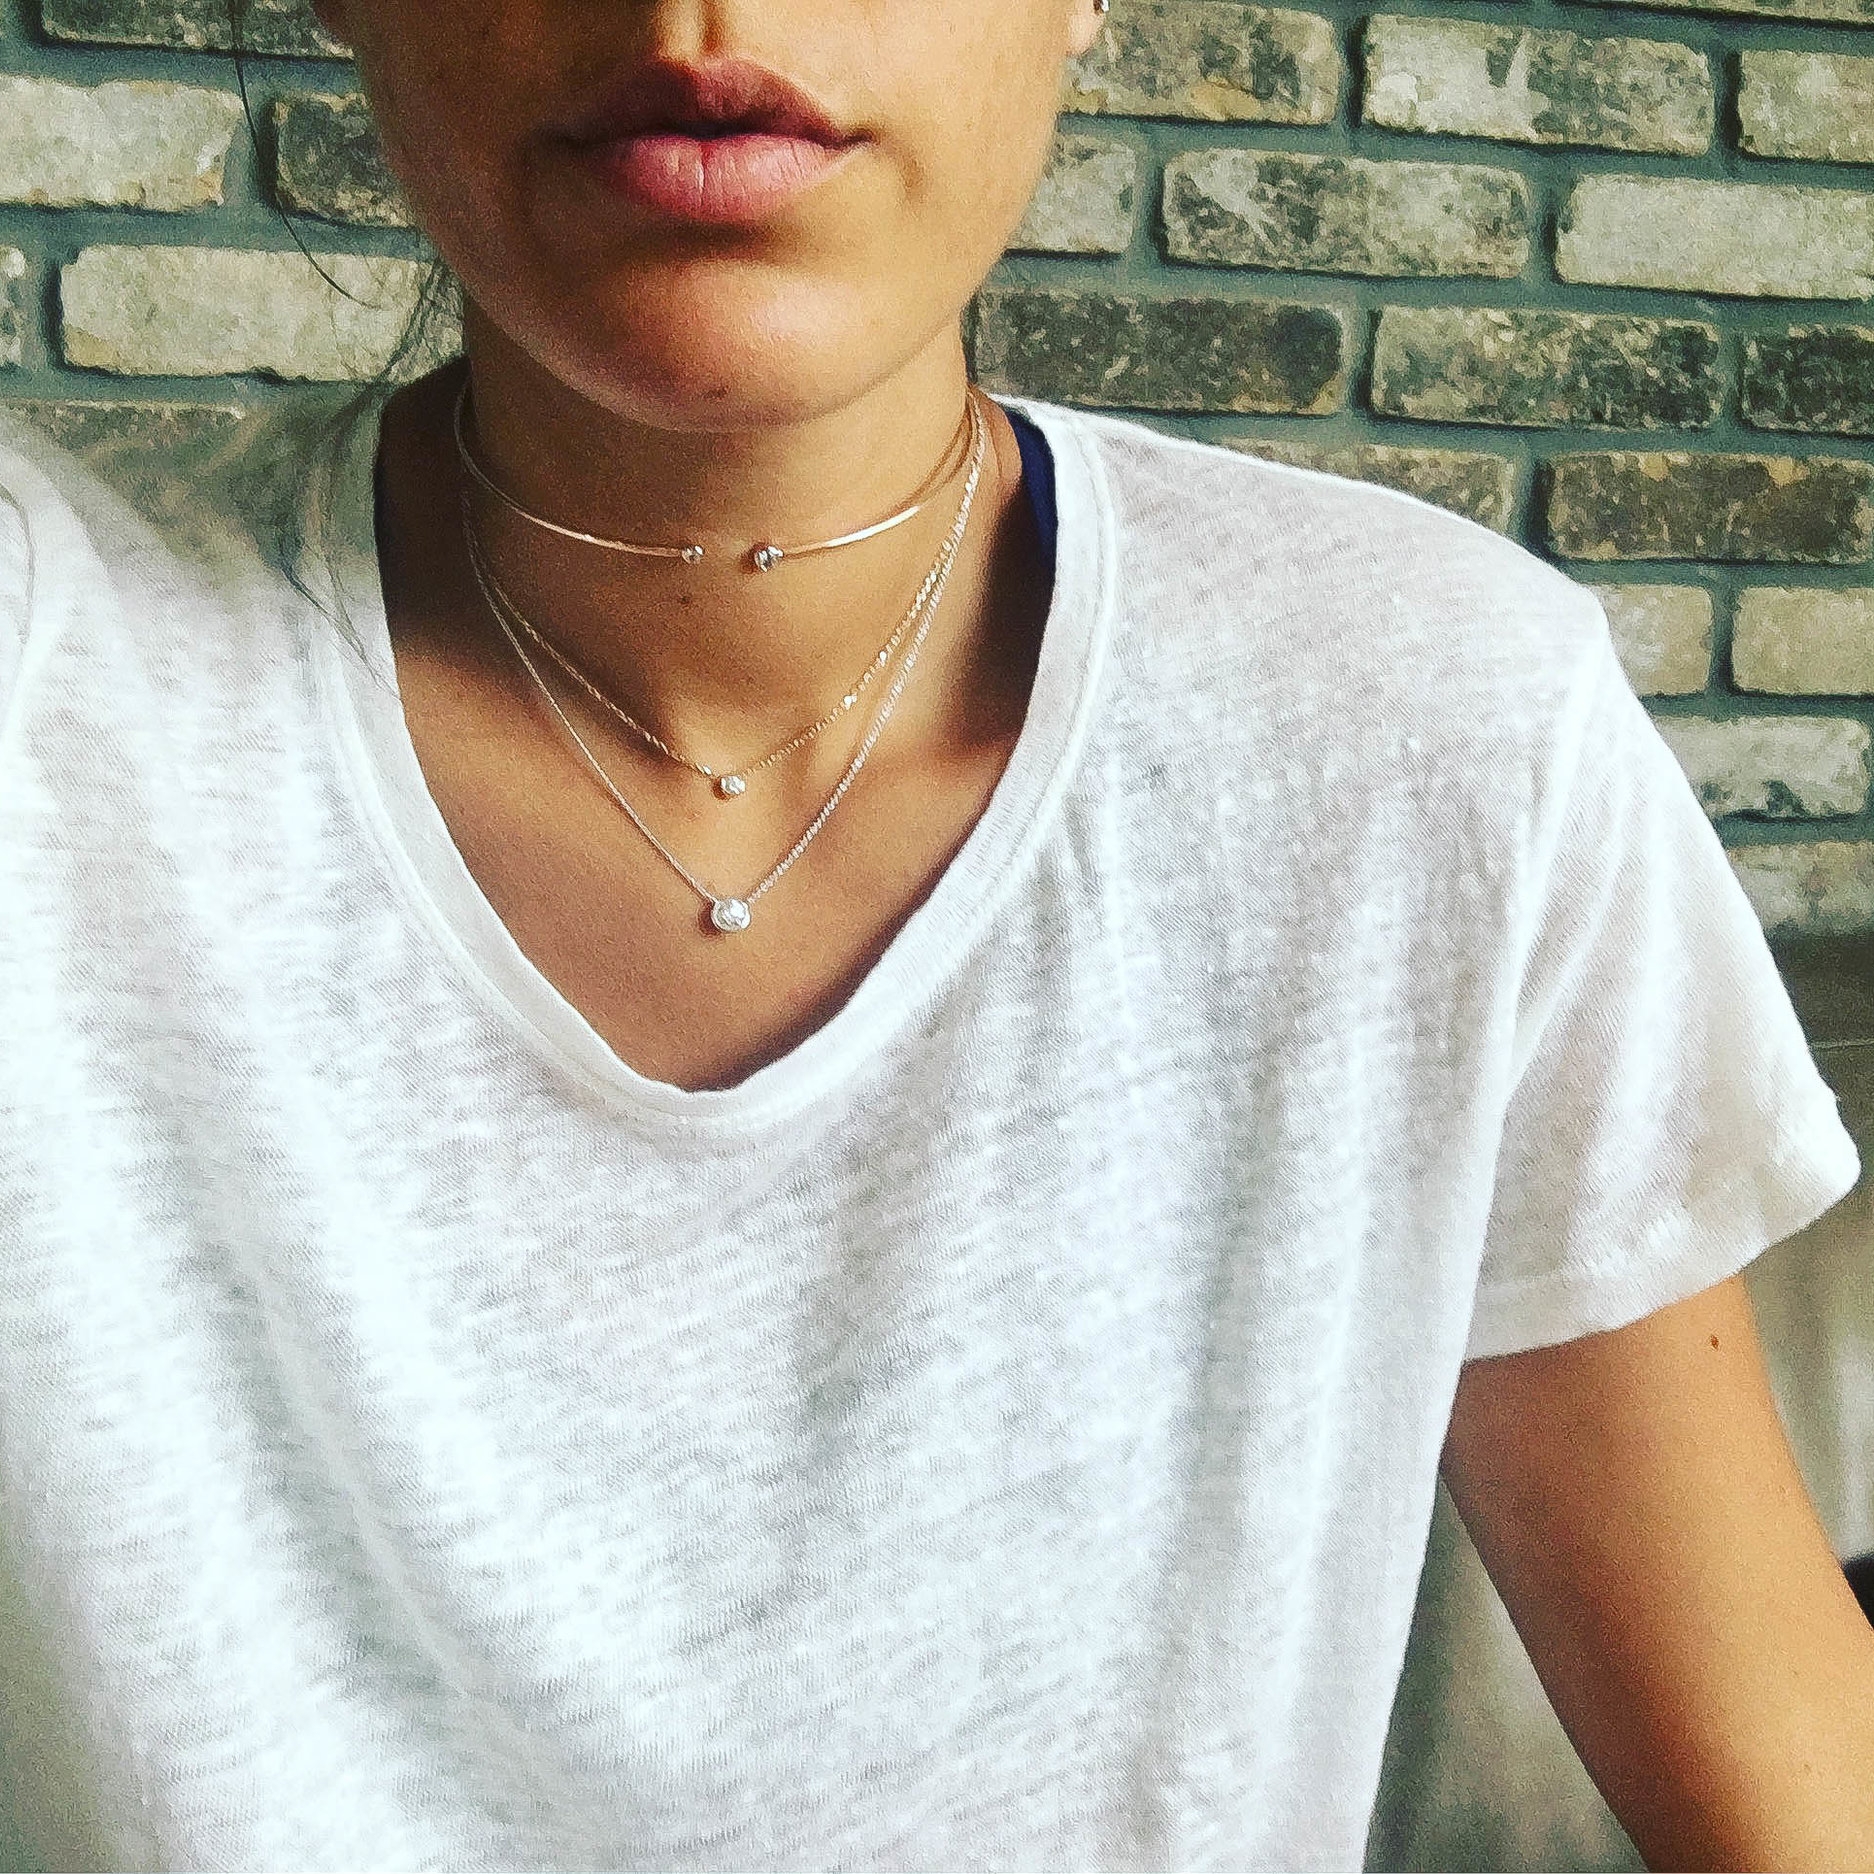 Danielle's Armor: Layering her diamond necklaces